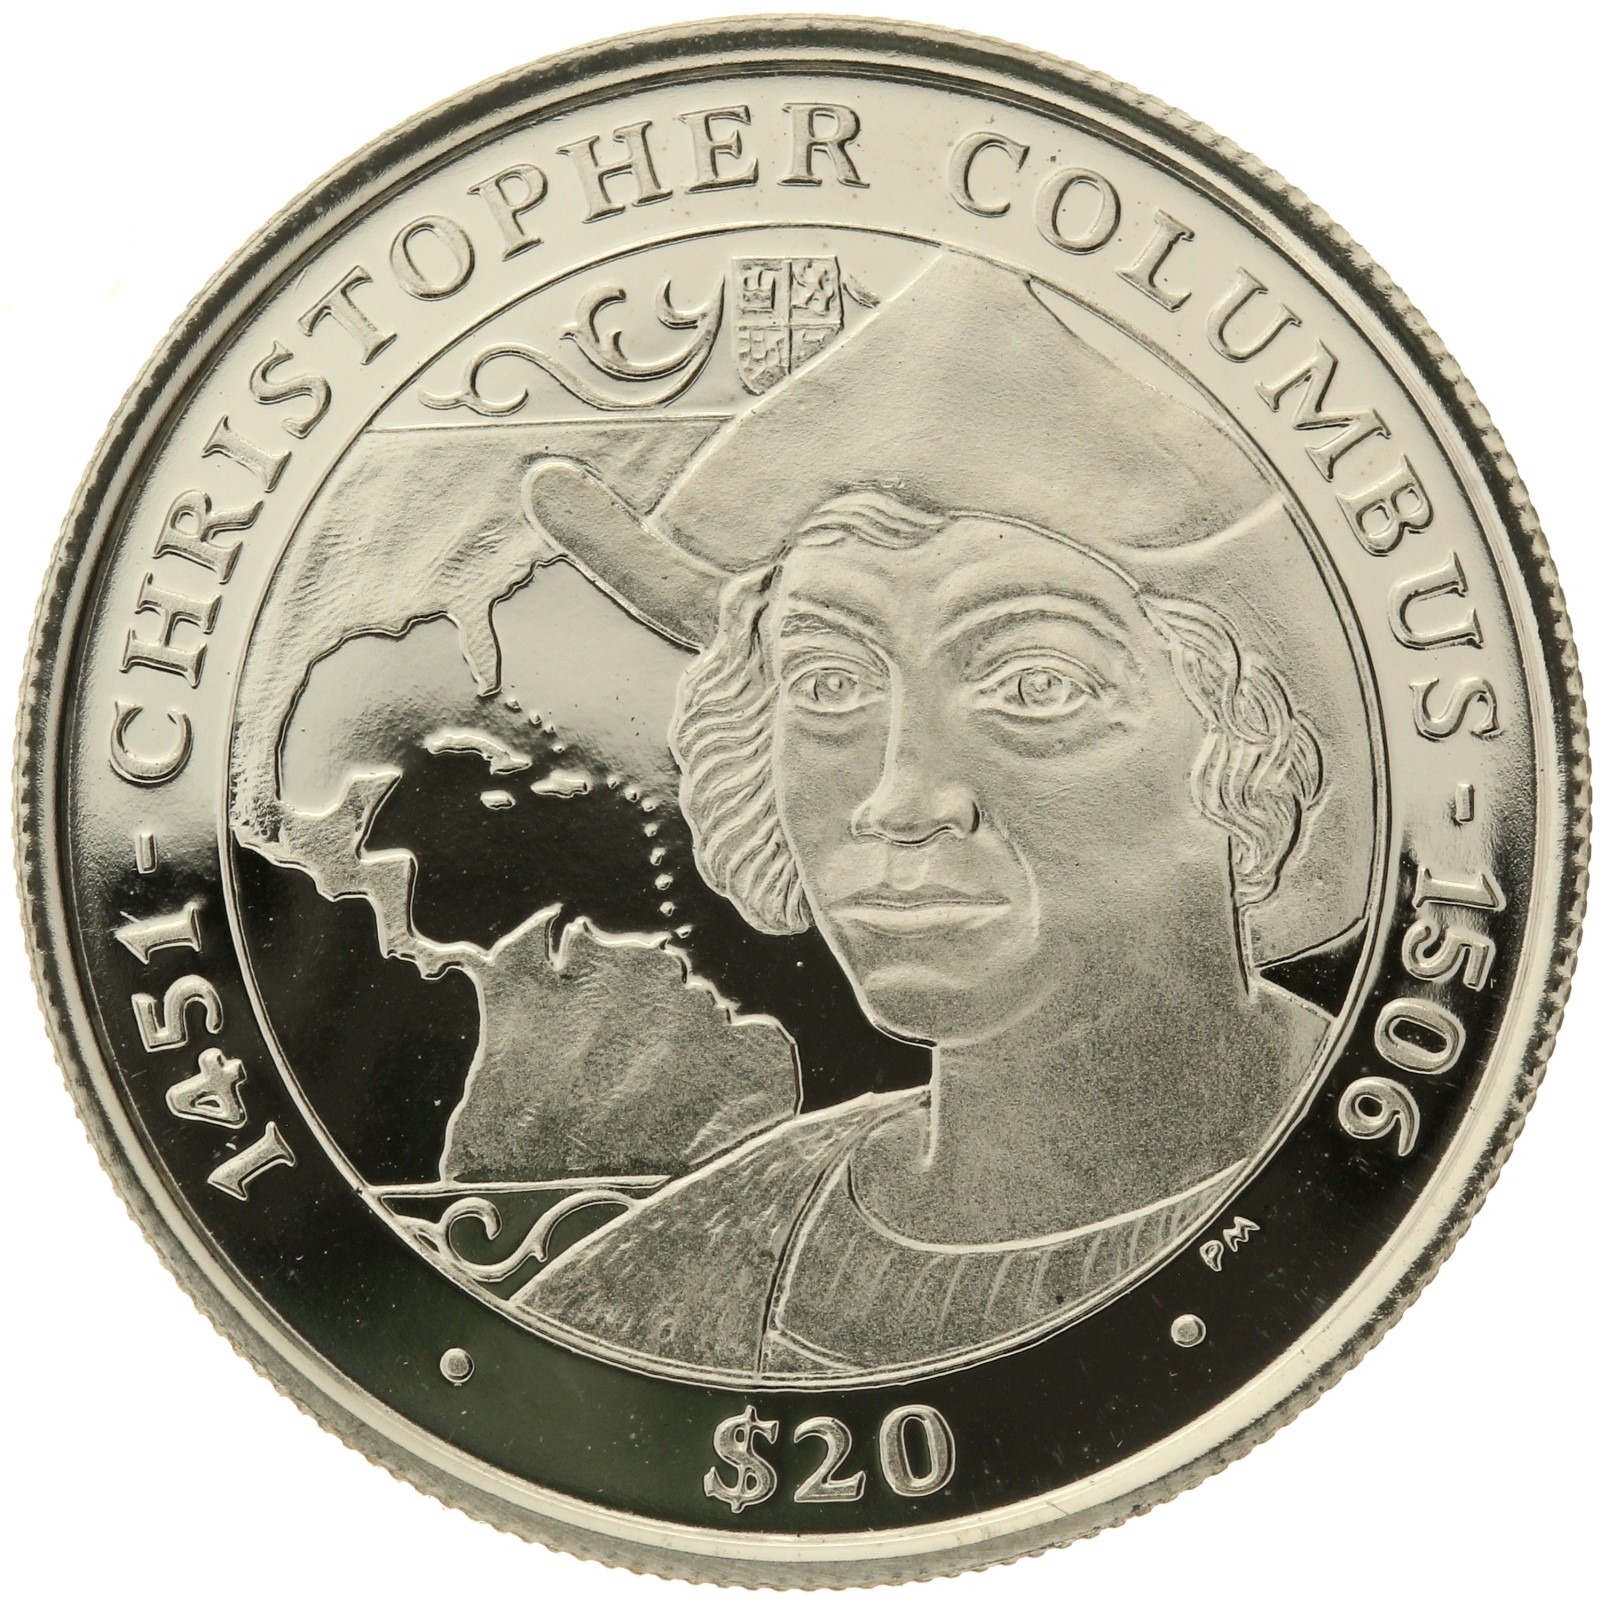 British Virgin Islands - 20 Dollars - 2006 - Elizabeth II - Christopher Columbus - White Gold